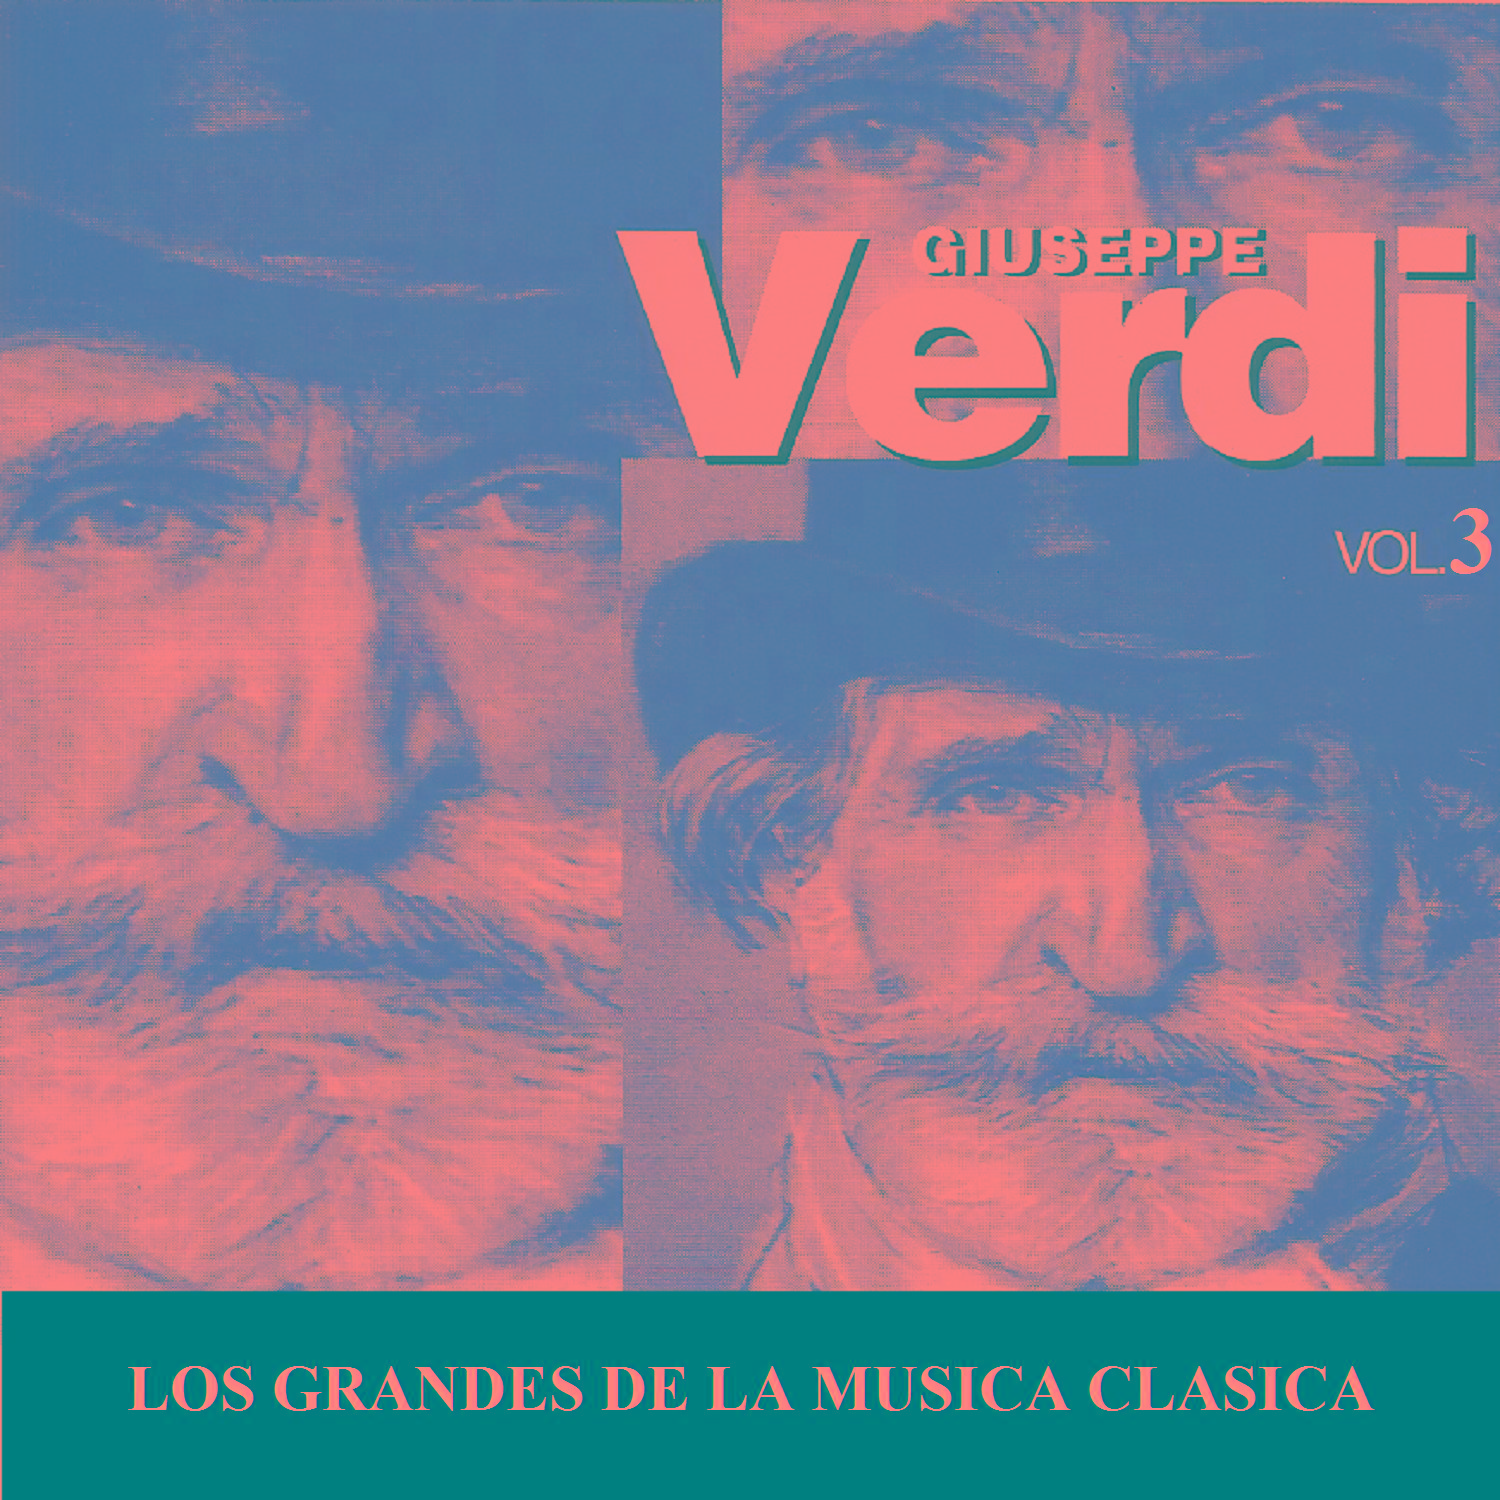 Los Grandes de la Musica Clasica - Giuseppe Verdi Vol. 3